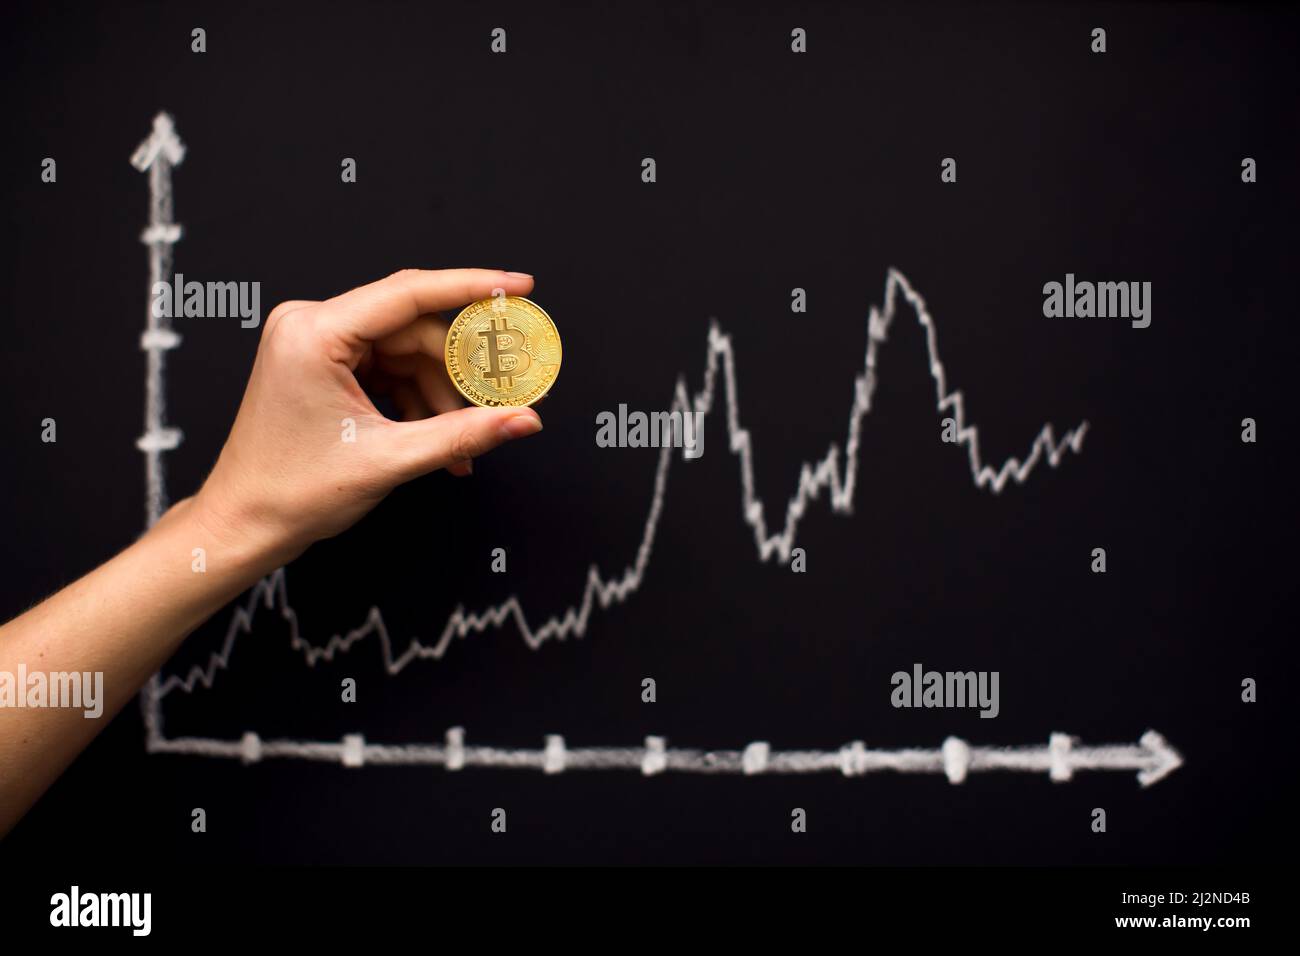 Gráfico de bitcoin con flecha hacia arriba en pizarra como criptomoneda en línea valor de comercio concepto creciente. Mano que sostiene bitcoin Foto de stock